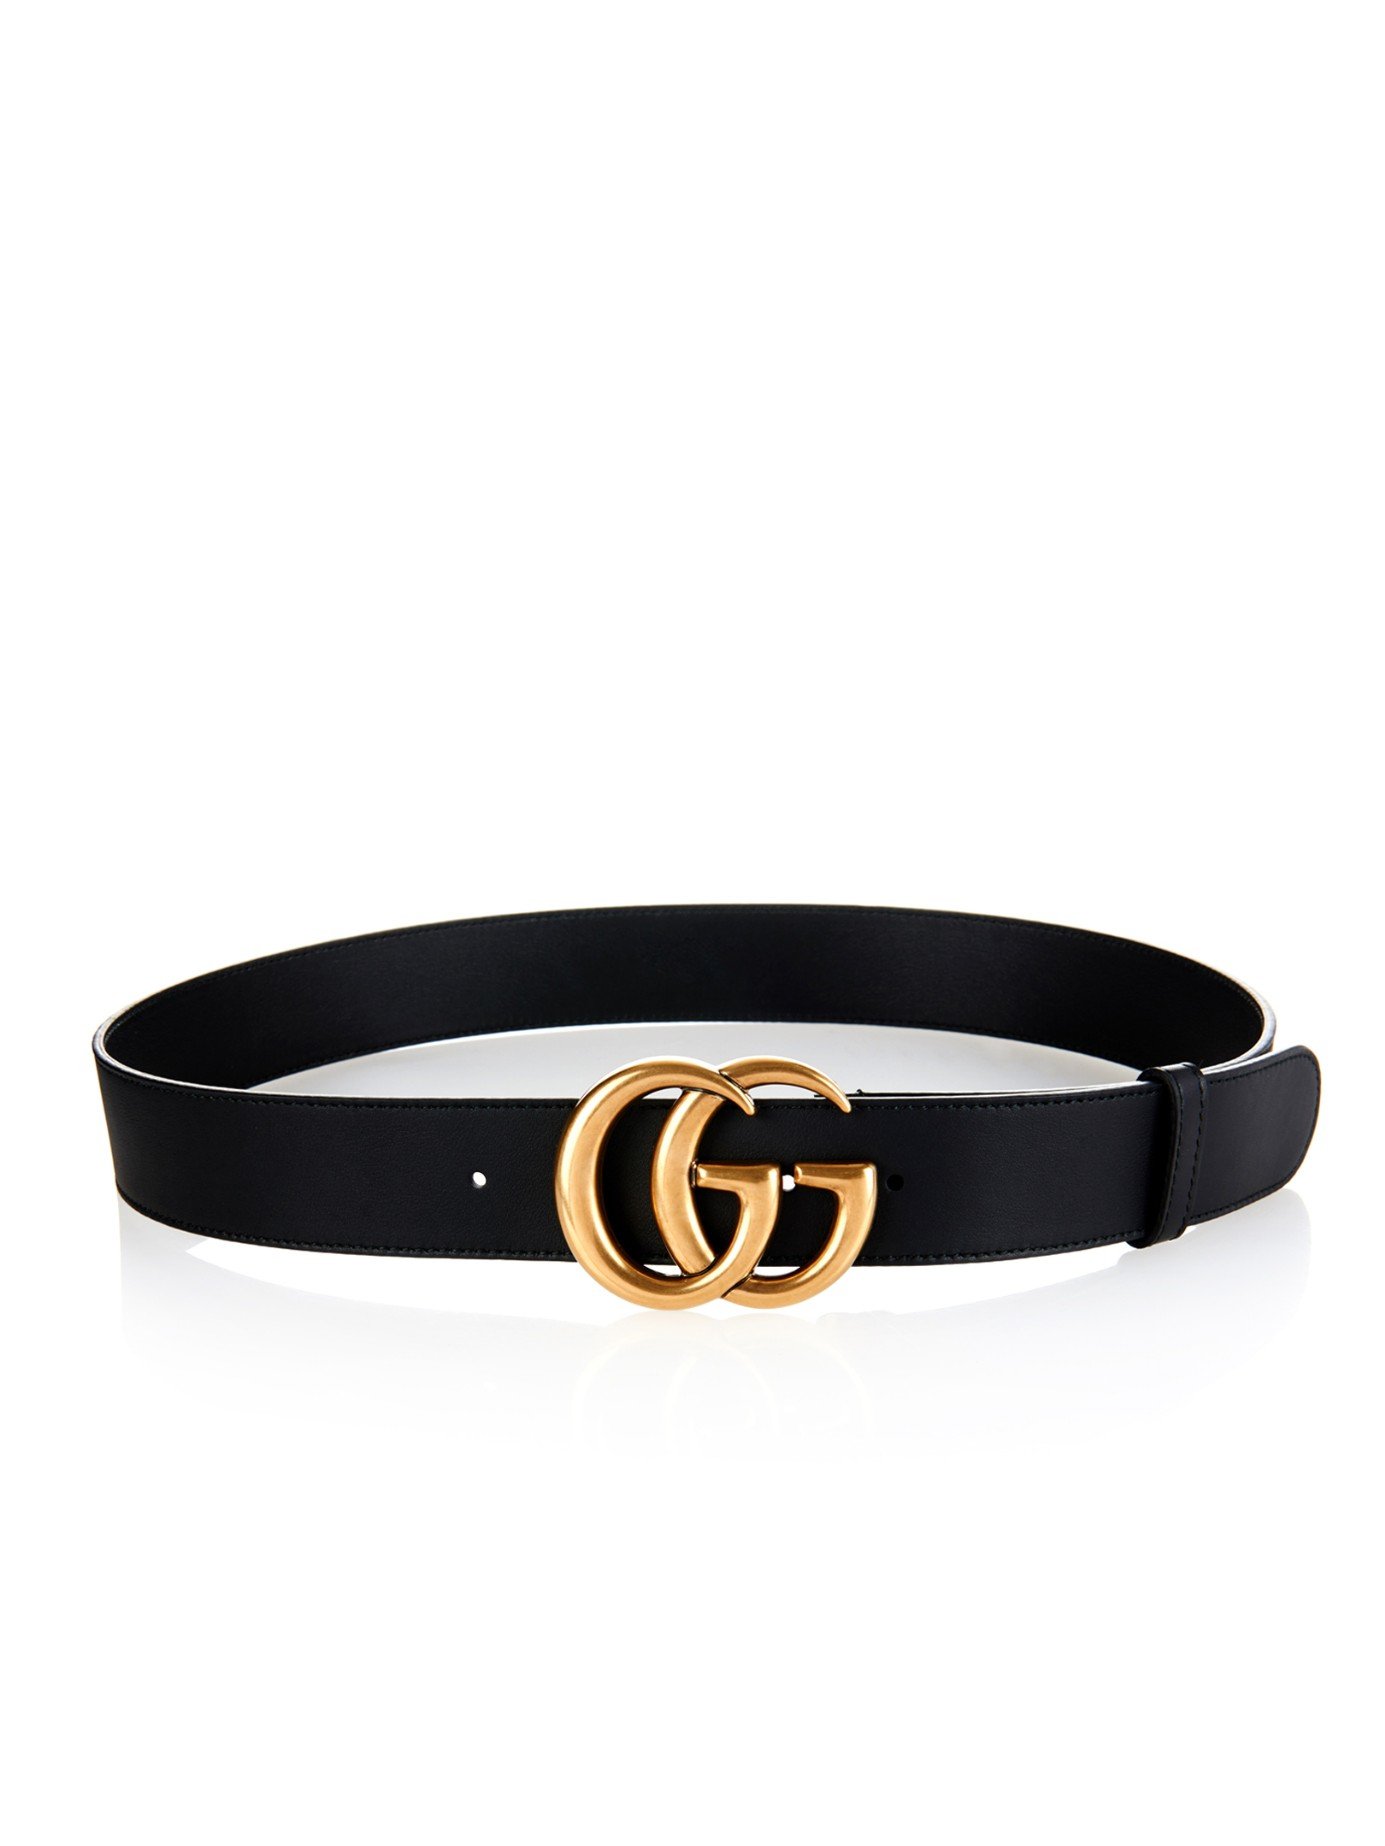 Gucci Gg-Logo Leather Belt in Black for Men - Lyst